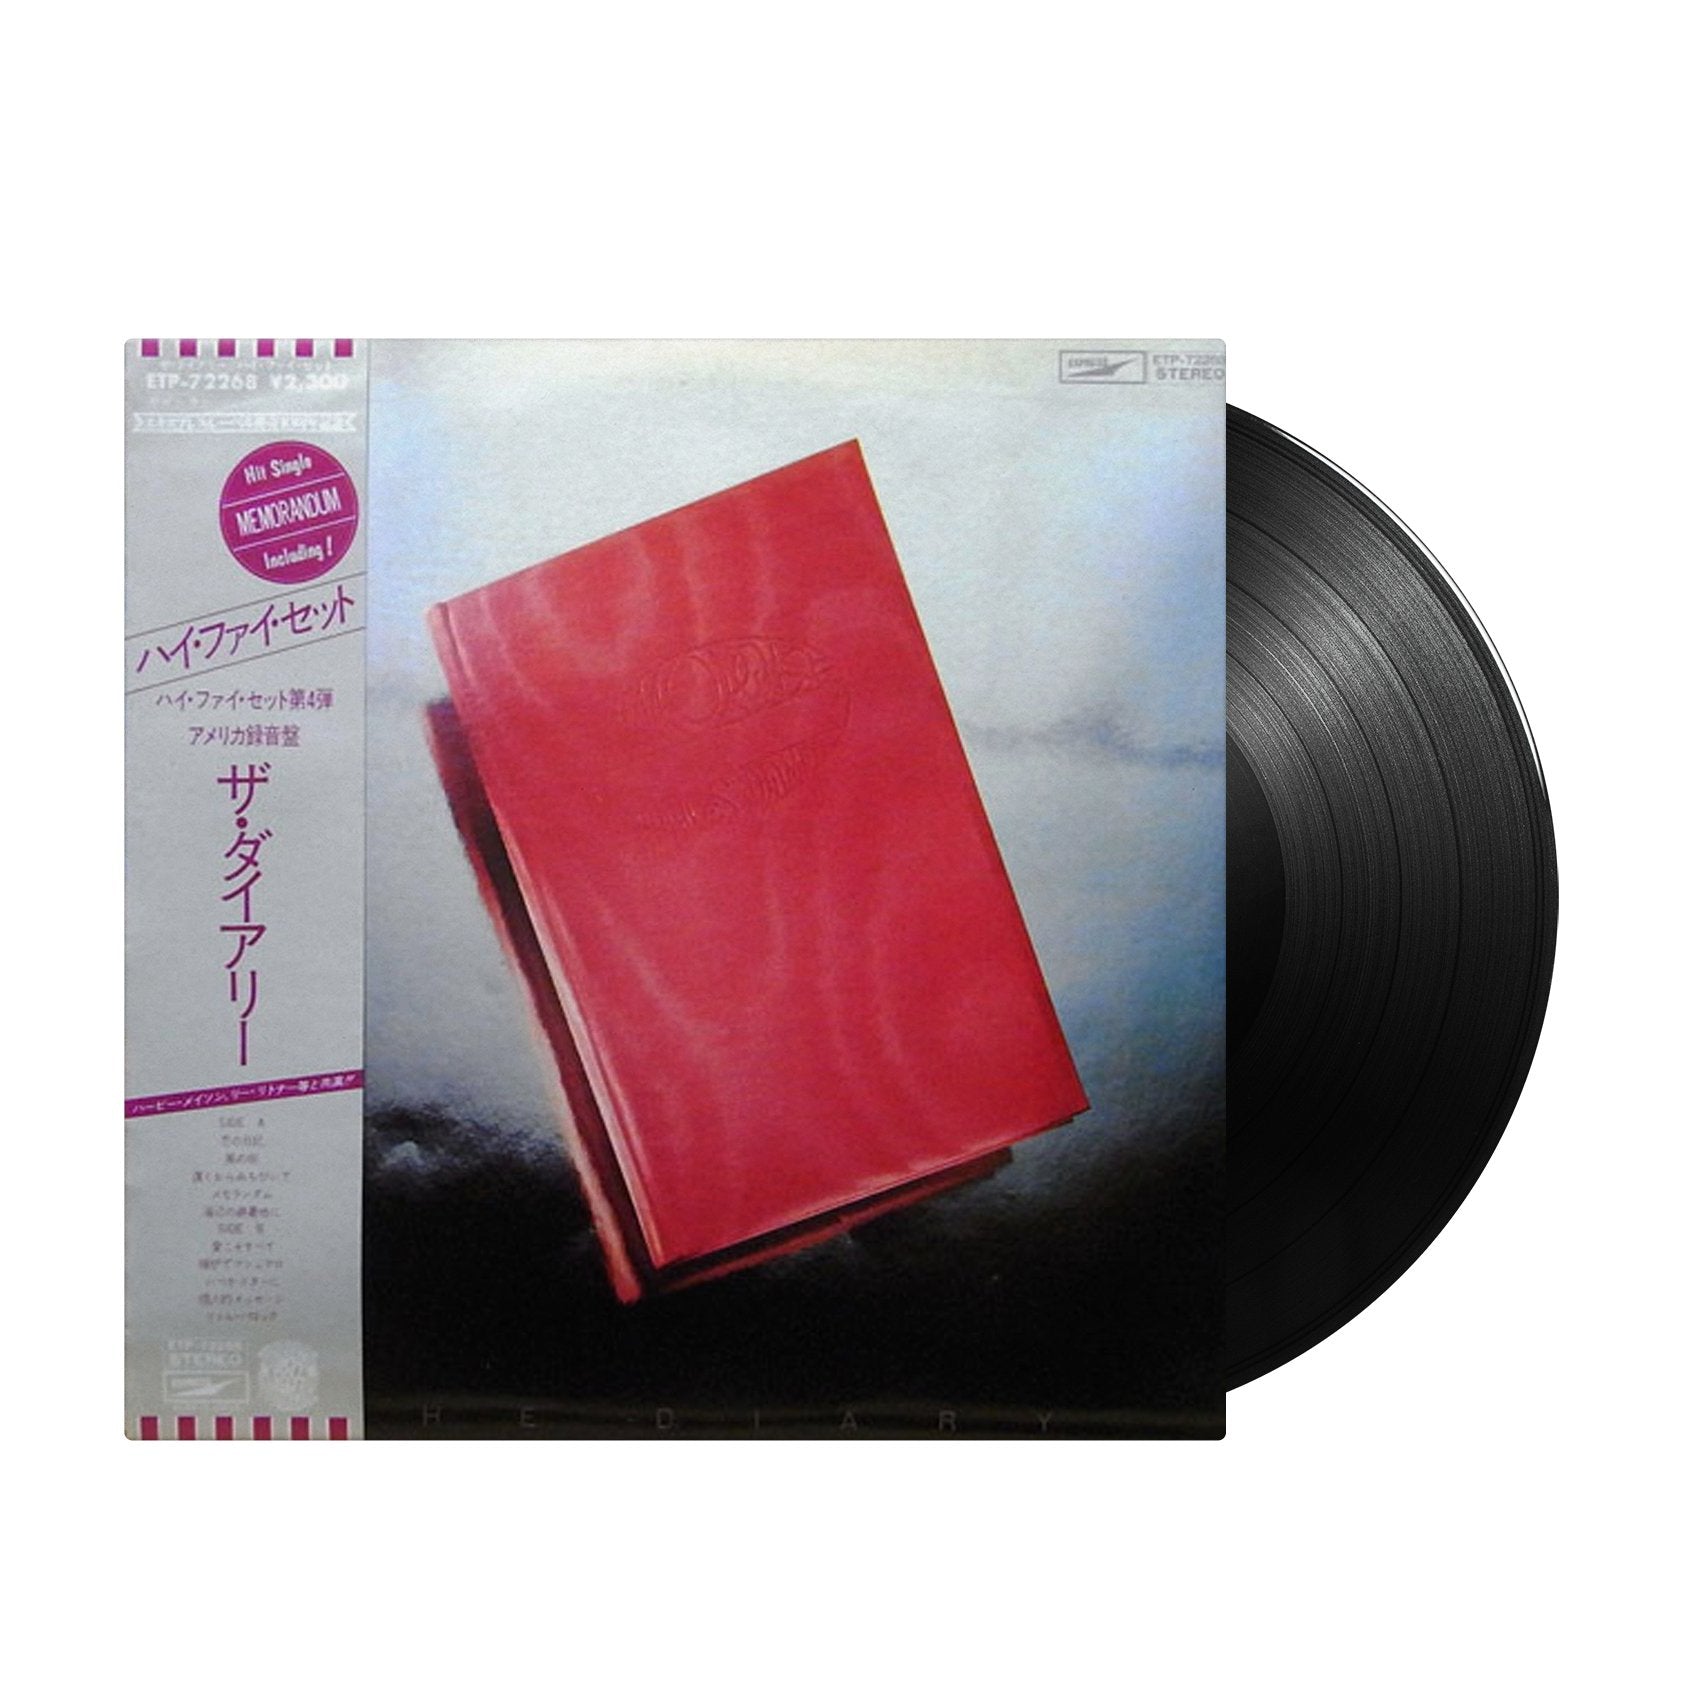 Hi Fi Set - The Diary (Japan Import) - Inner Ocean Records